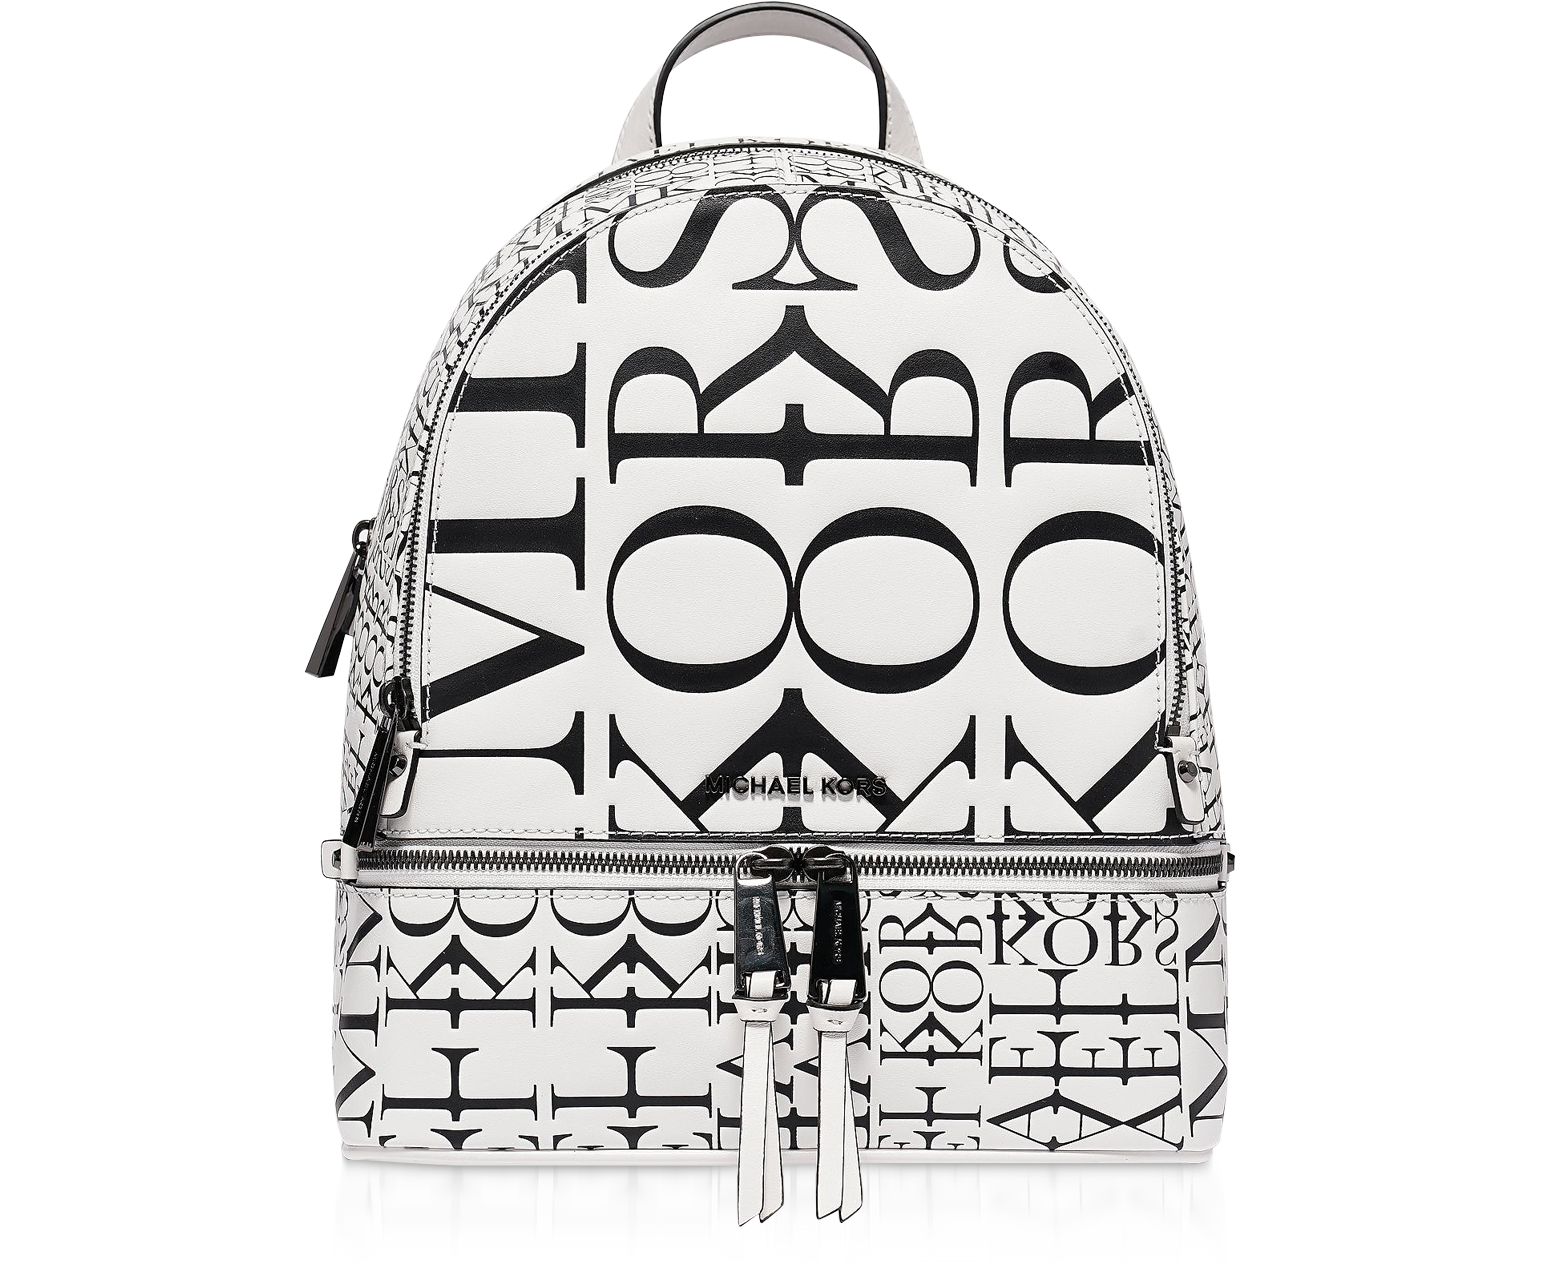 michael kors rhea medium backpack sale